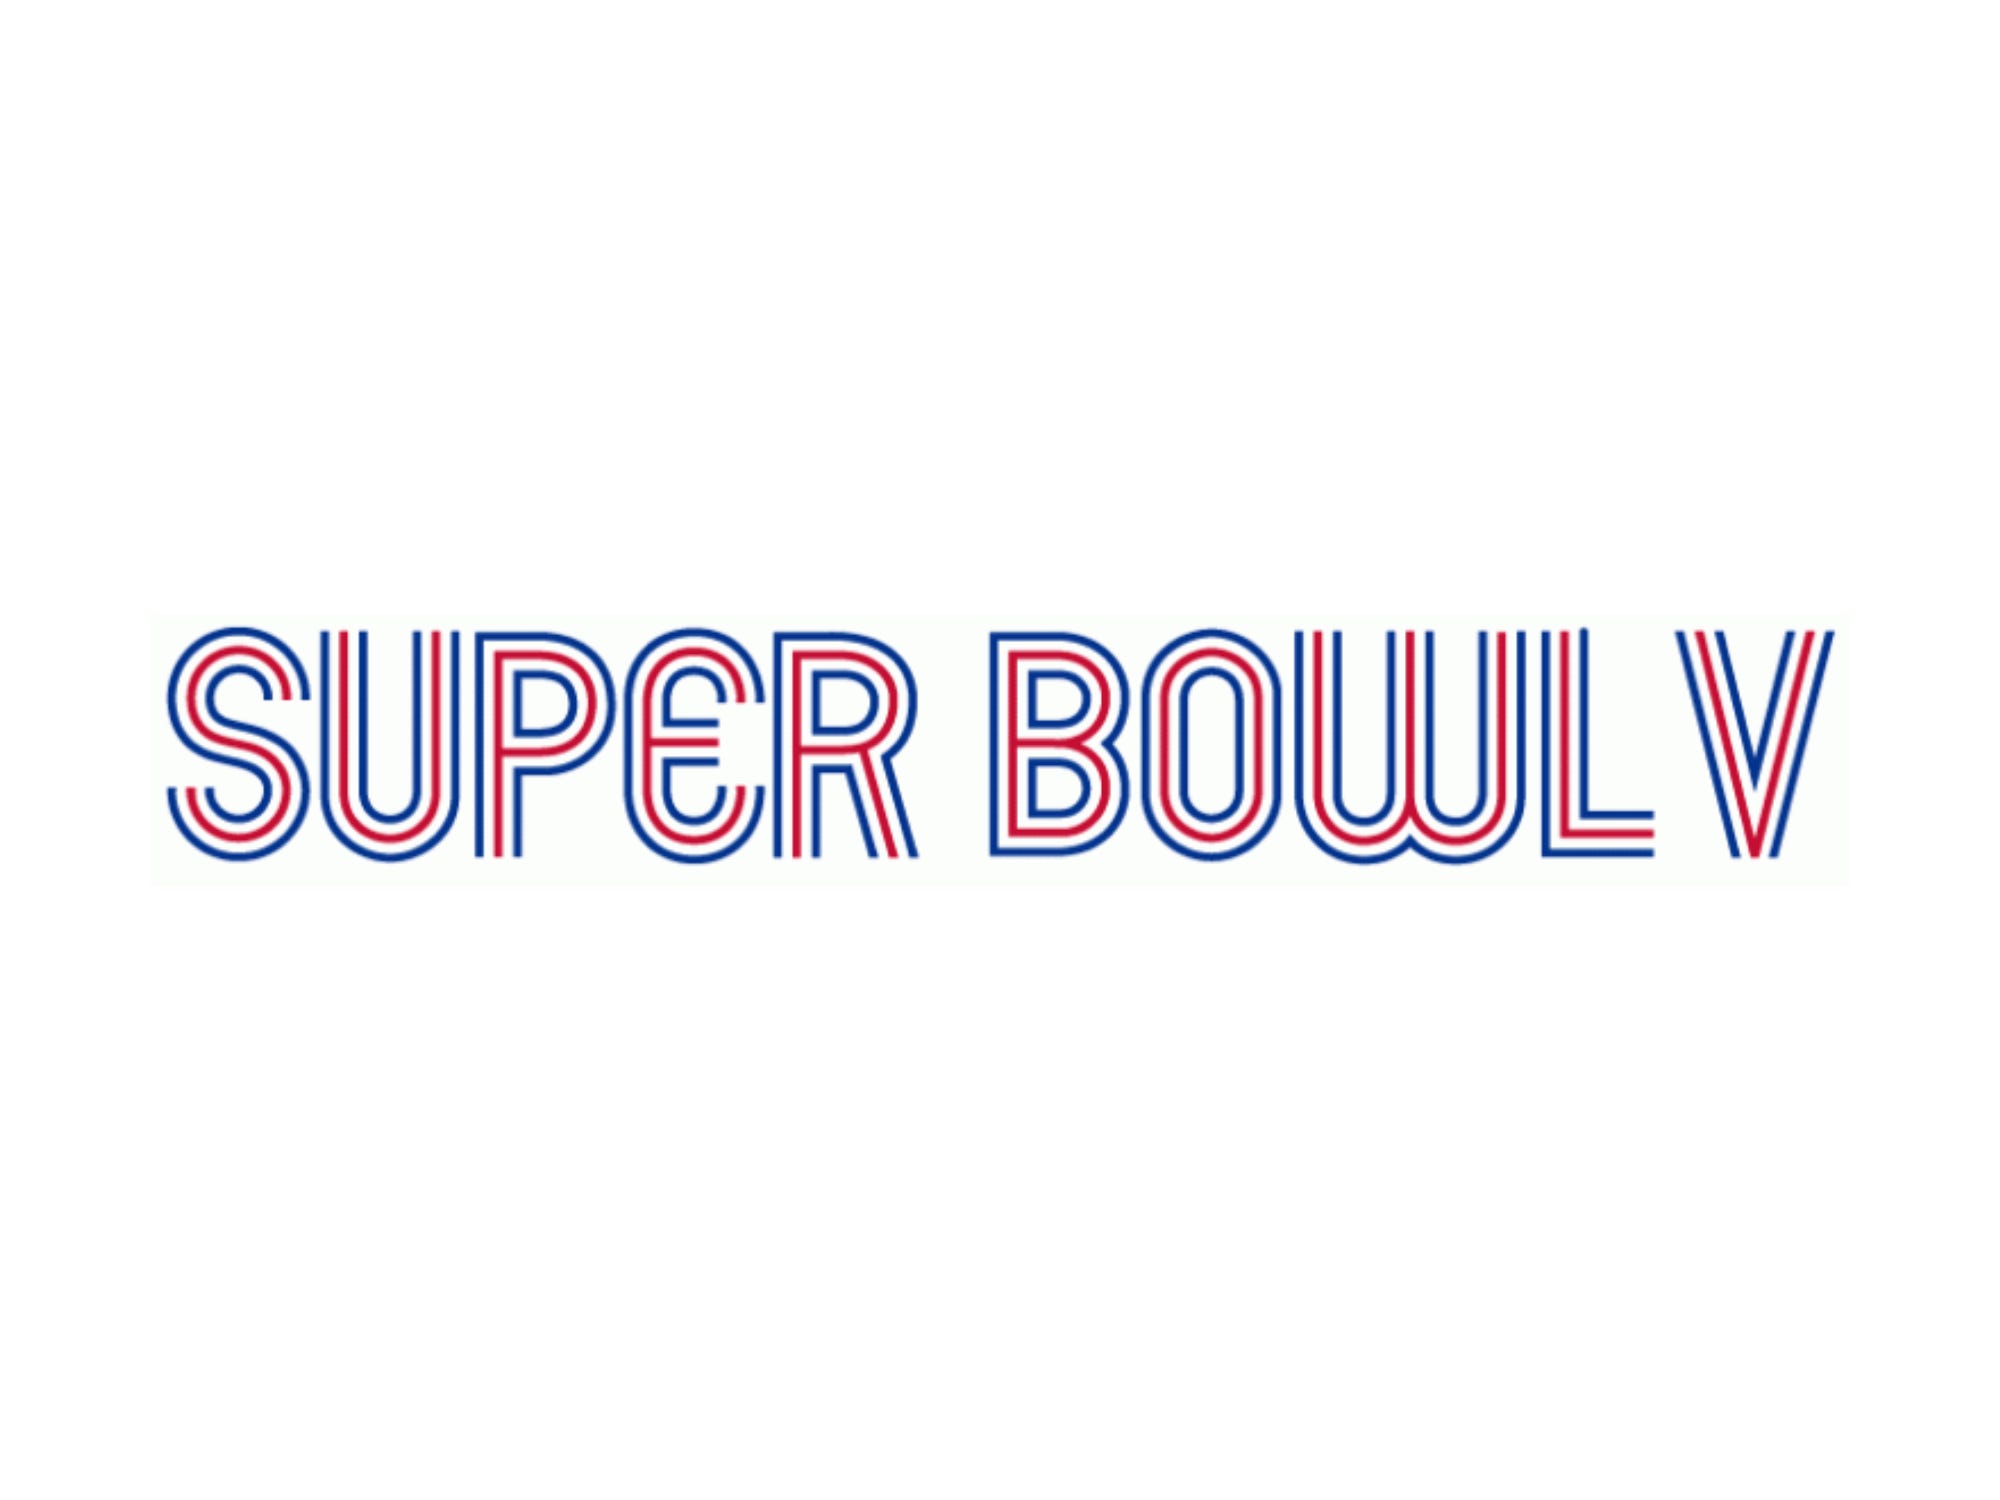 Super Bowl V